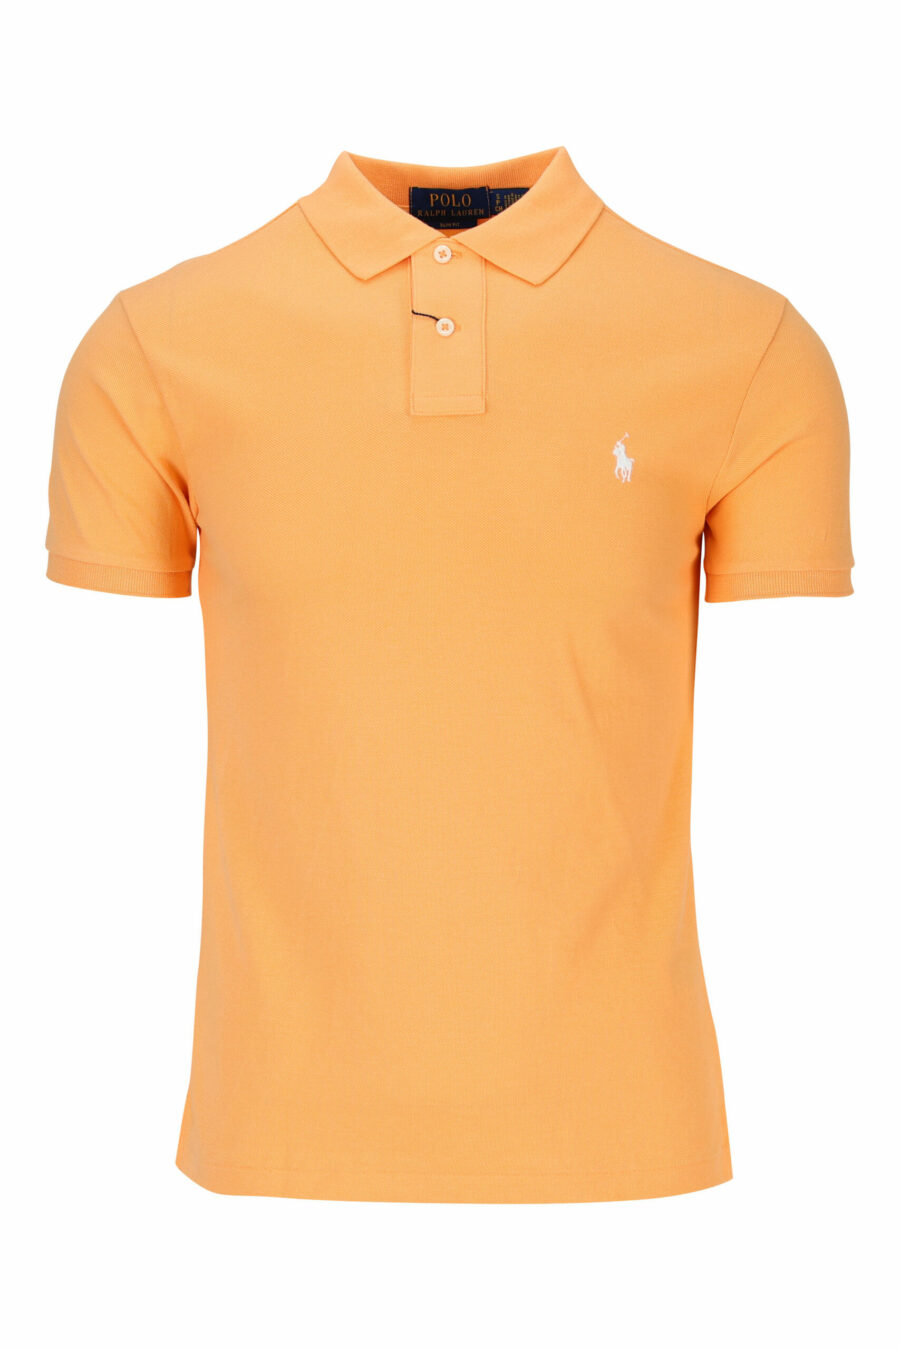 Polo orange avec mini-logo "polo" - 3616411864697 en échelle